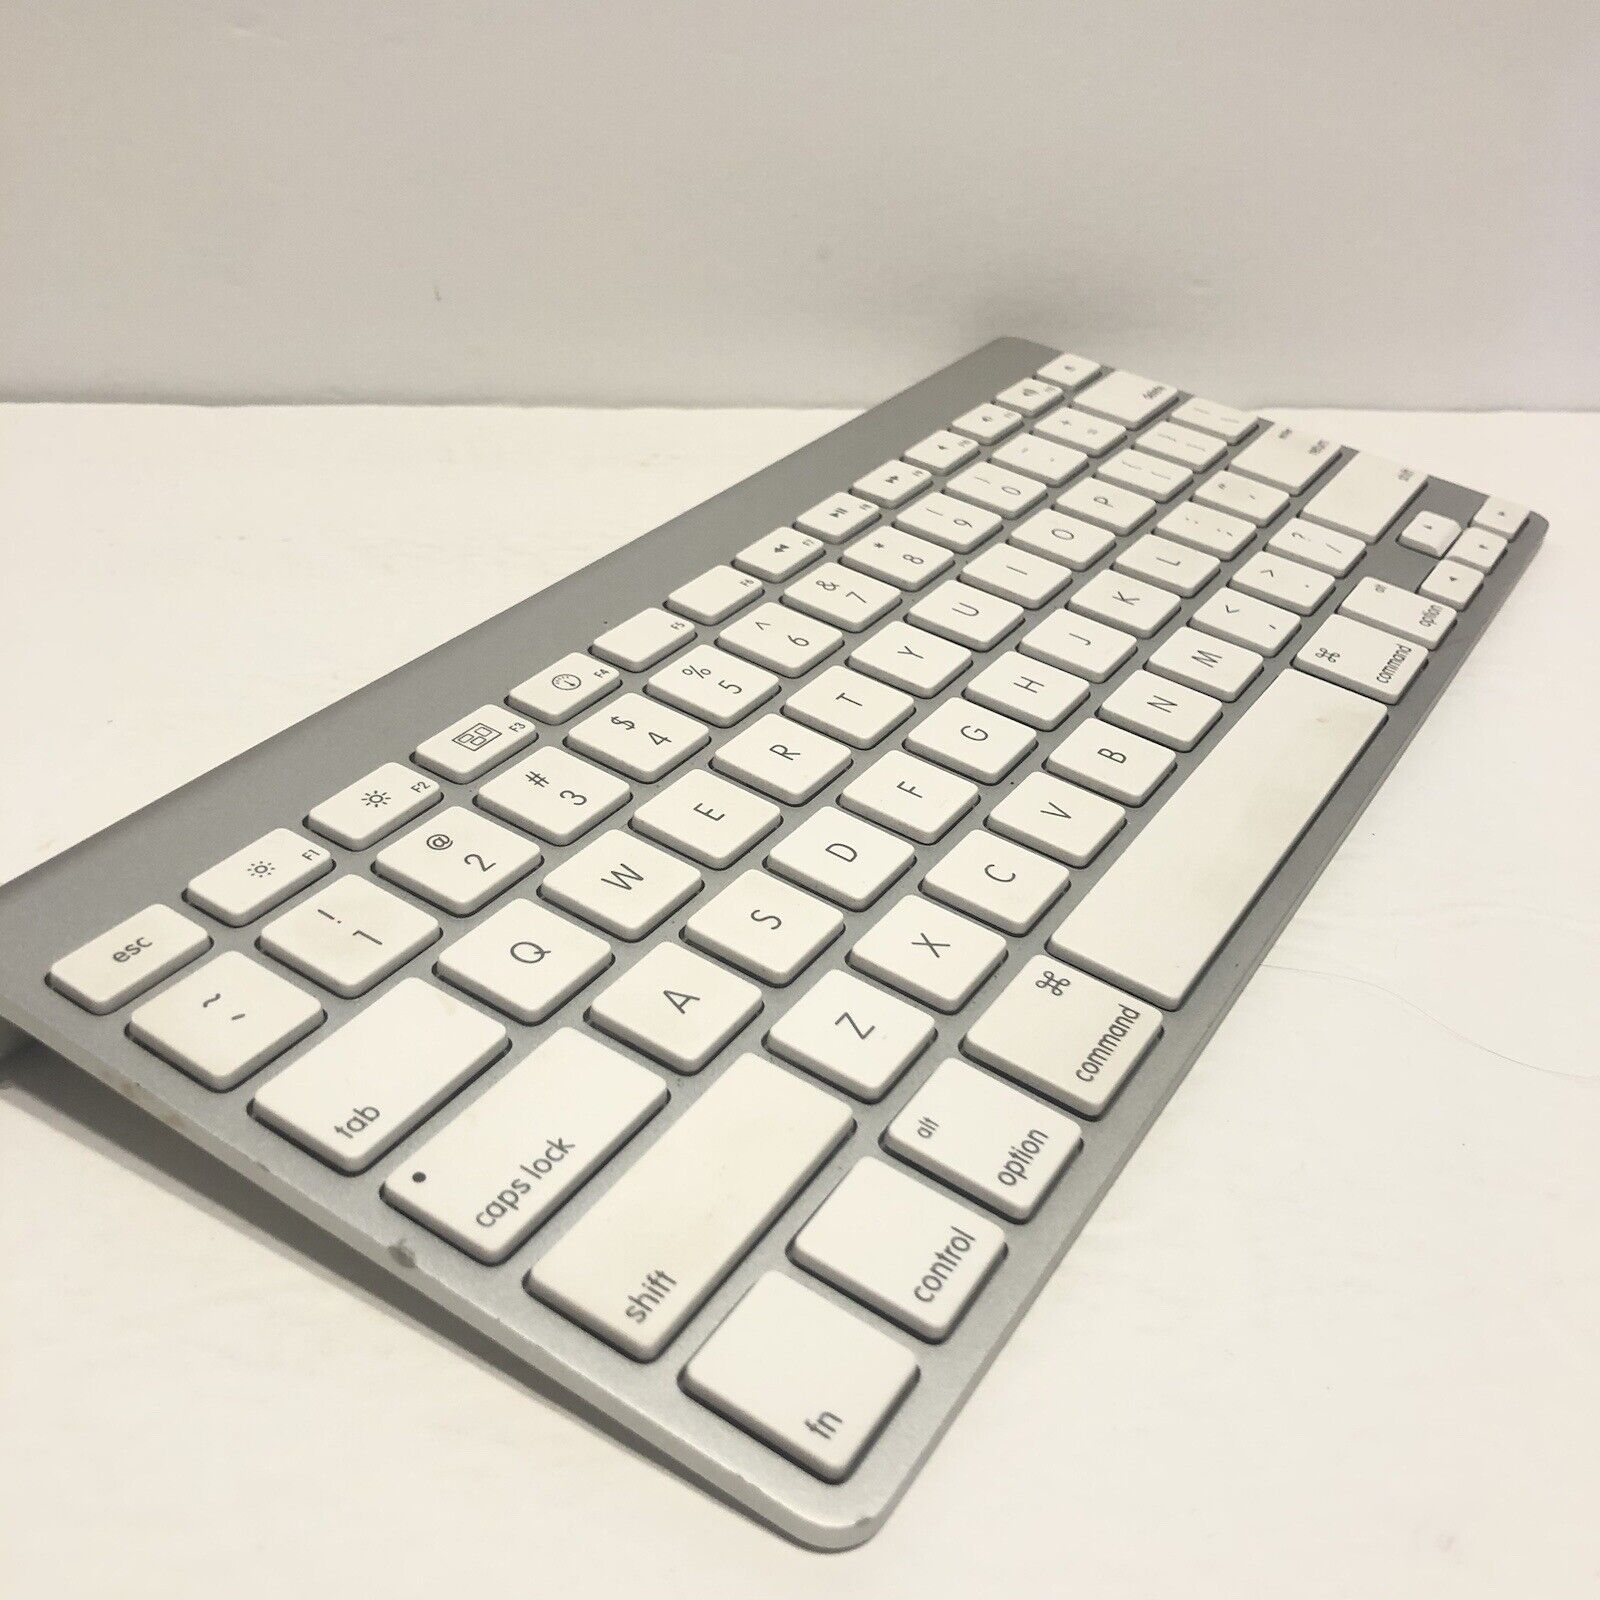 Original Aluminum Apple Magic Keyboard Slim Wireless Bluetooth A1314 Tested